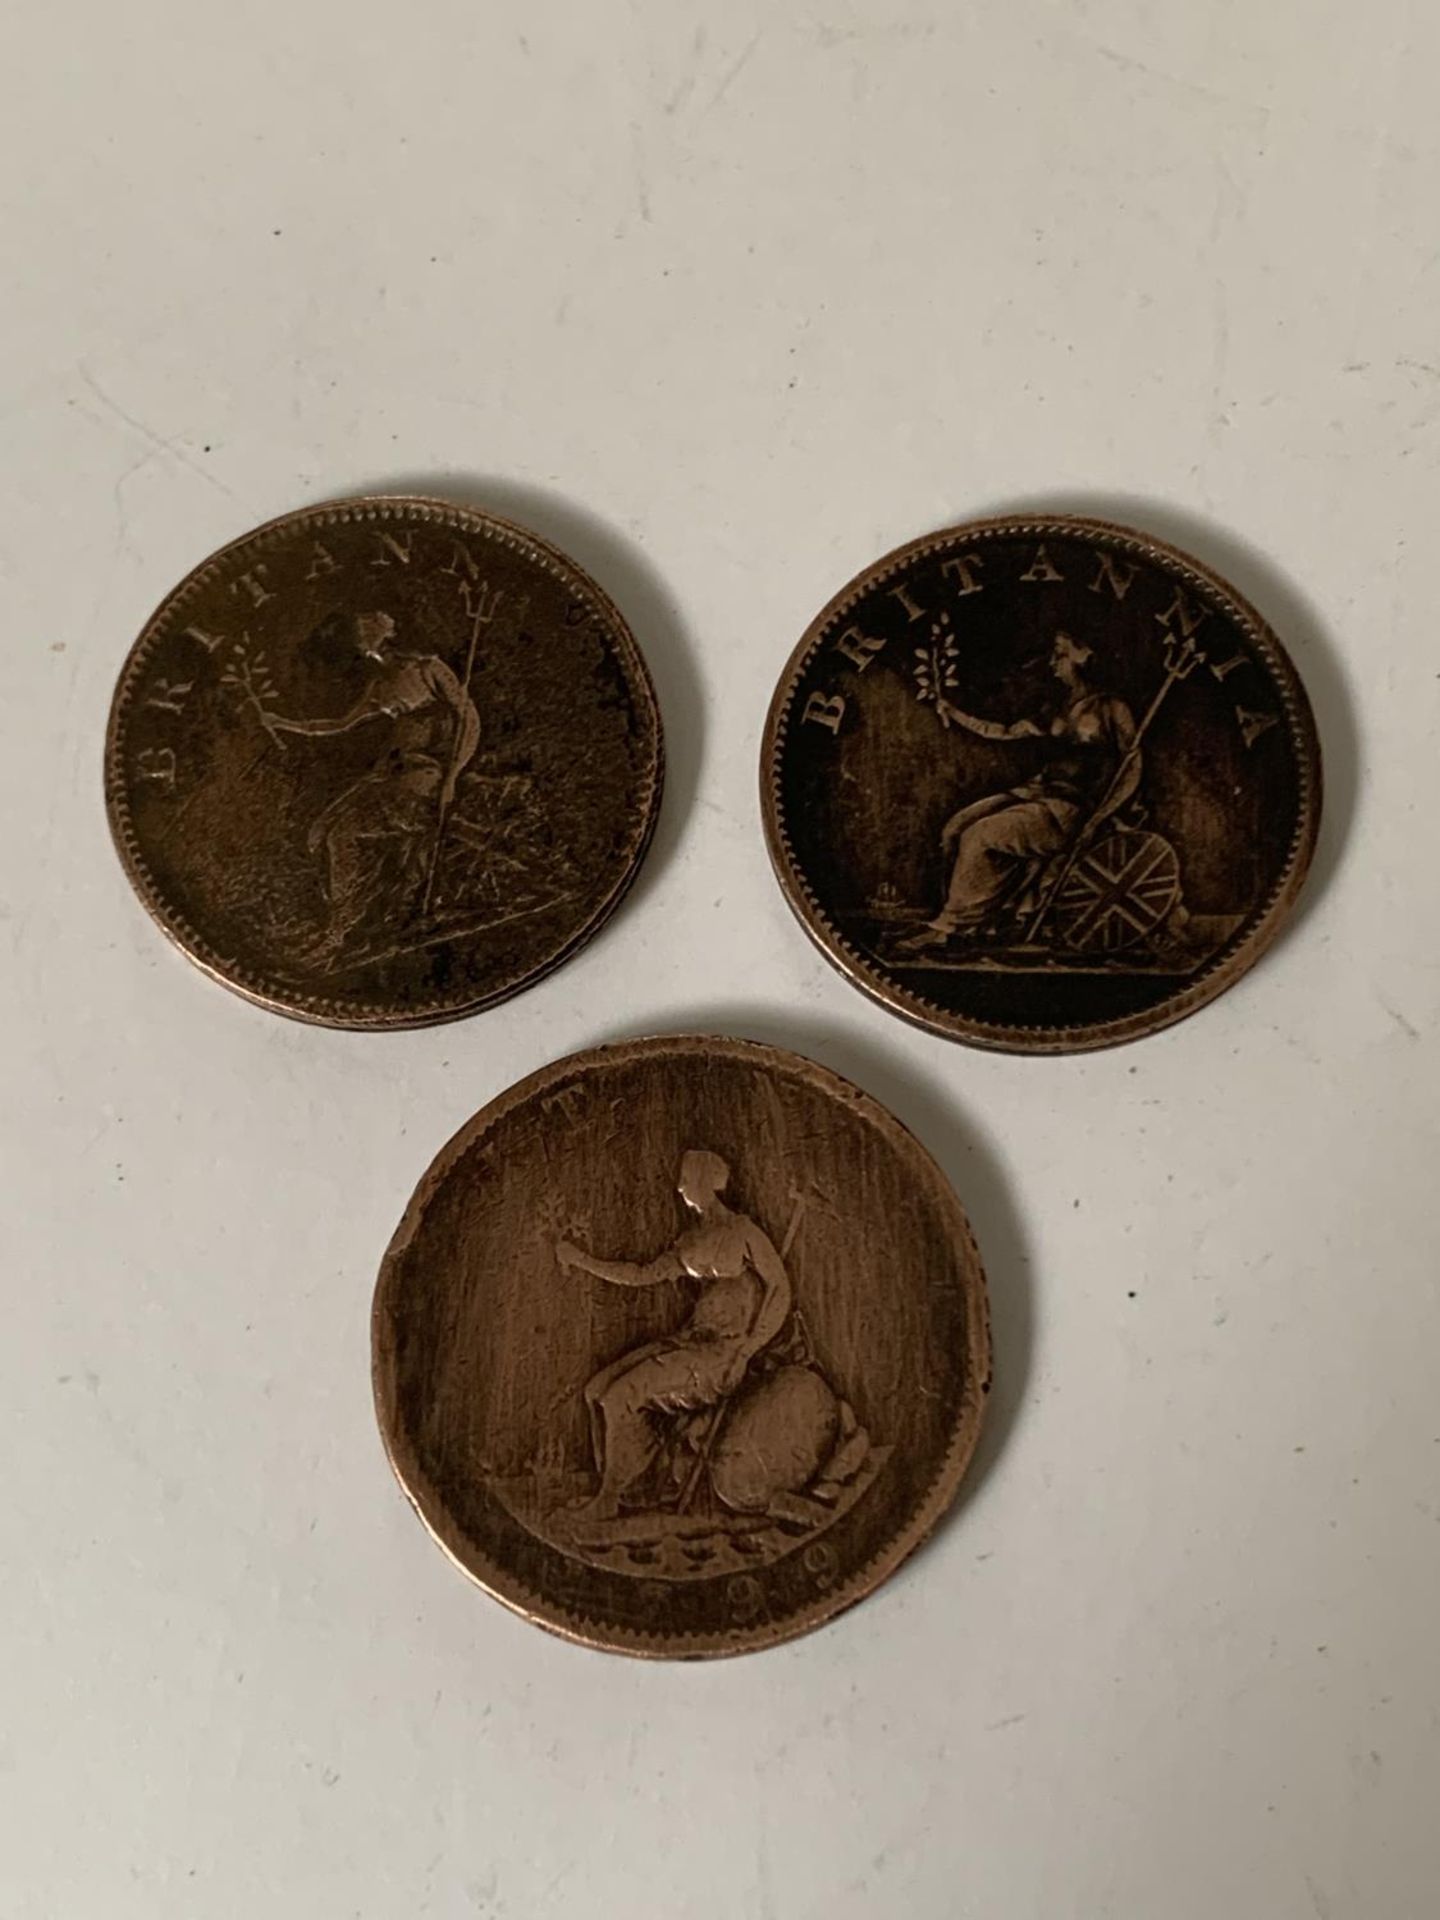 THREE GEORGE III HALFPENNY COINS - 1799, 1806 AND 1807